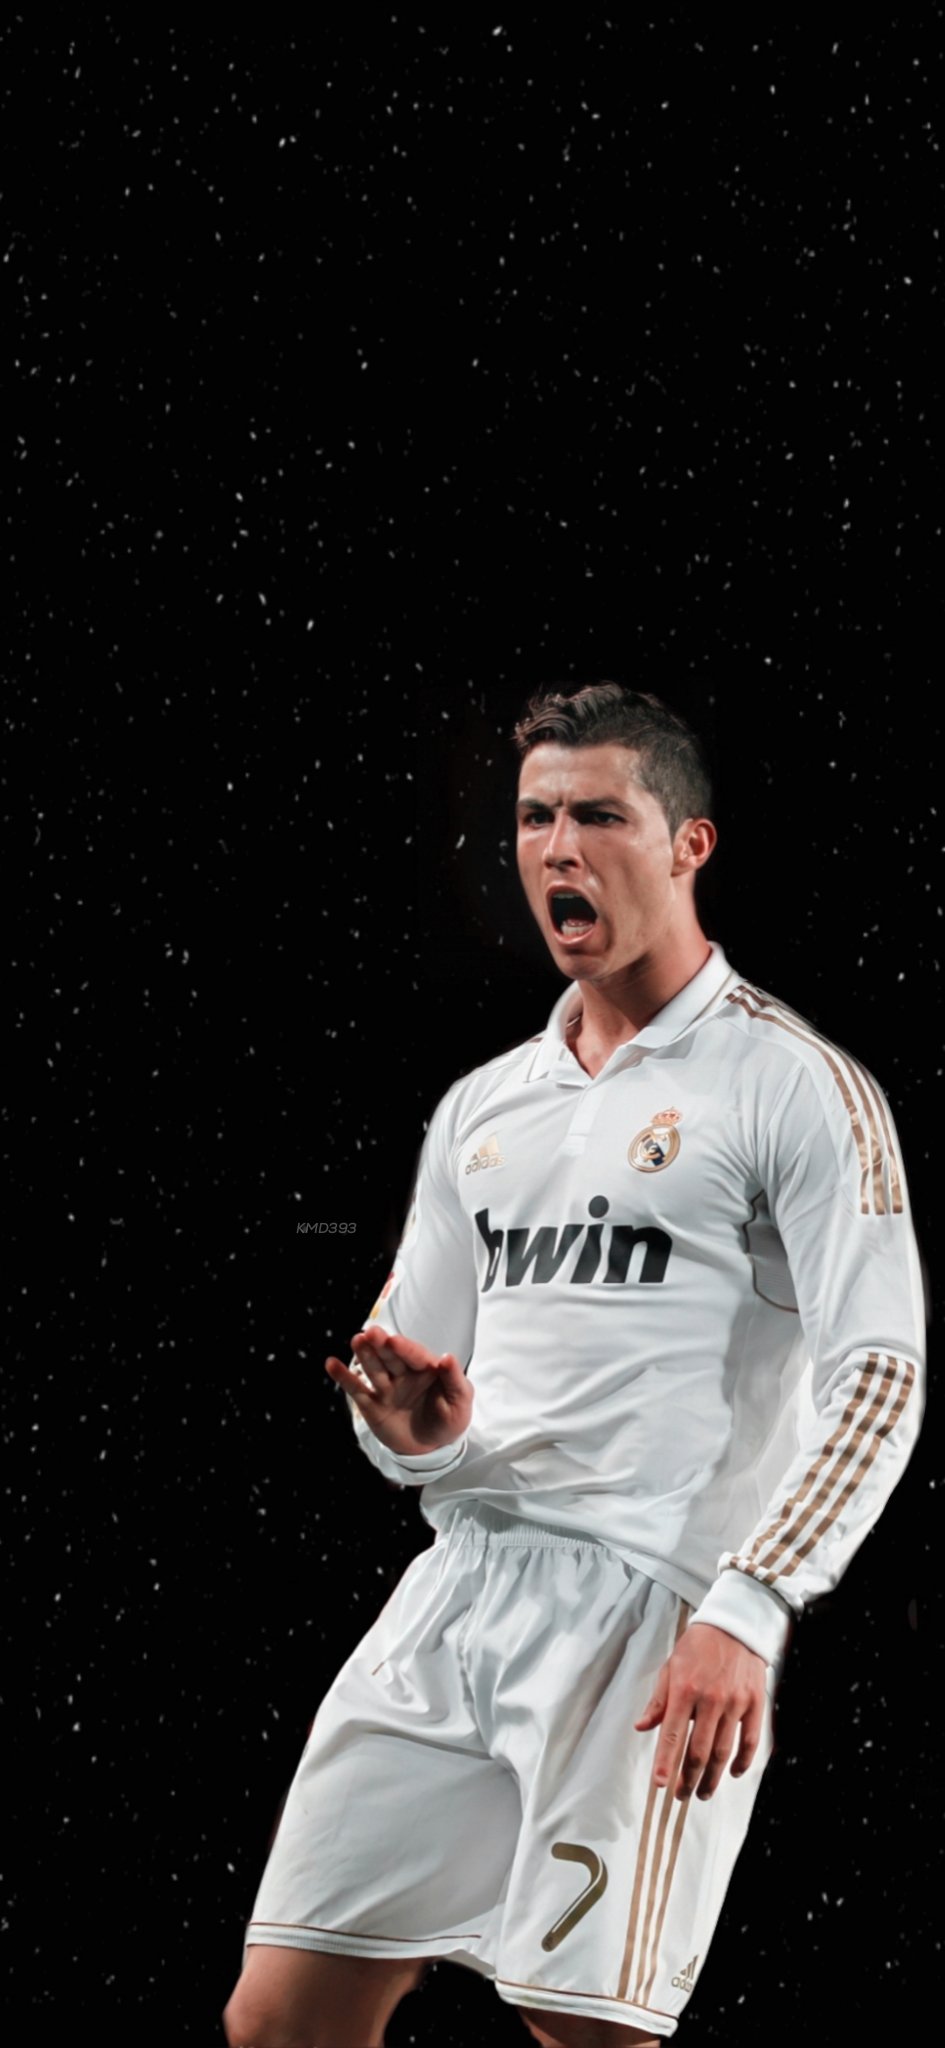 Footy4EM on Twitter Some 𝕽𝖊𝖙𝖗𝖔 Cristiano Ronaldo to brighten up your  day  Cristiano Ronaldo Vertical Wallpaper Graphics   httpstcoXZ67l3YZDN  Twitter